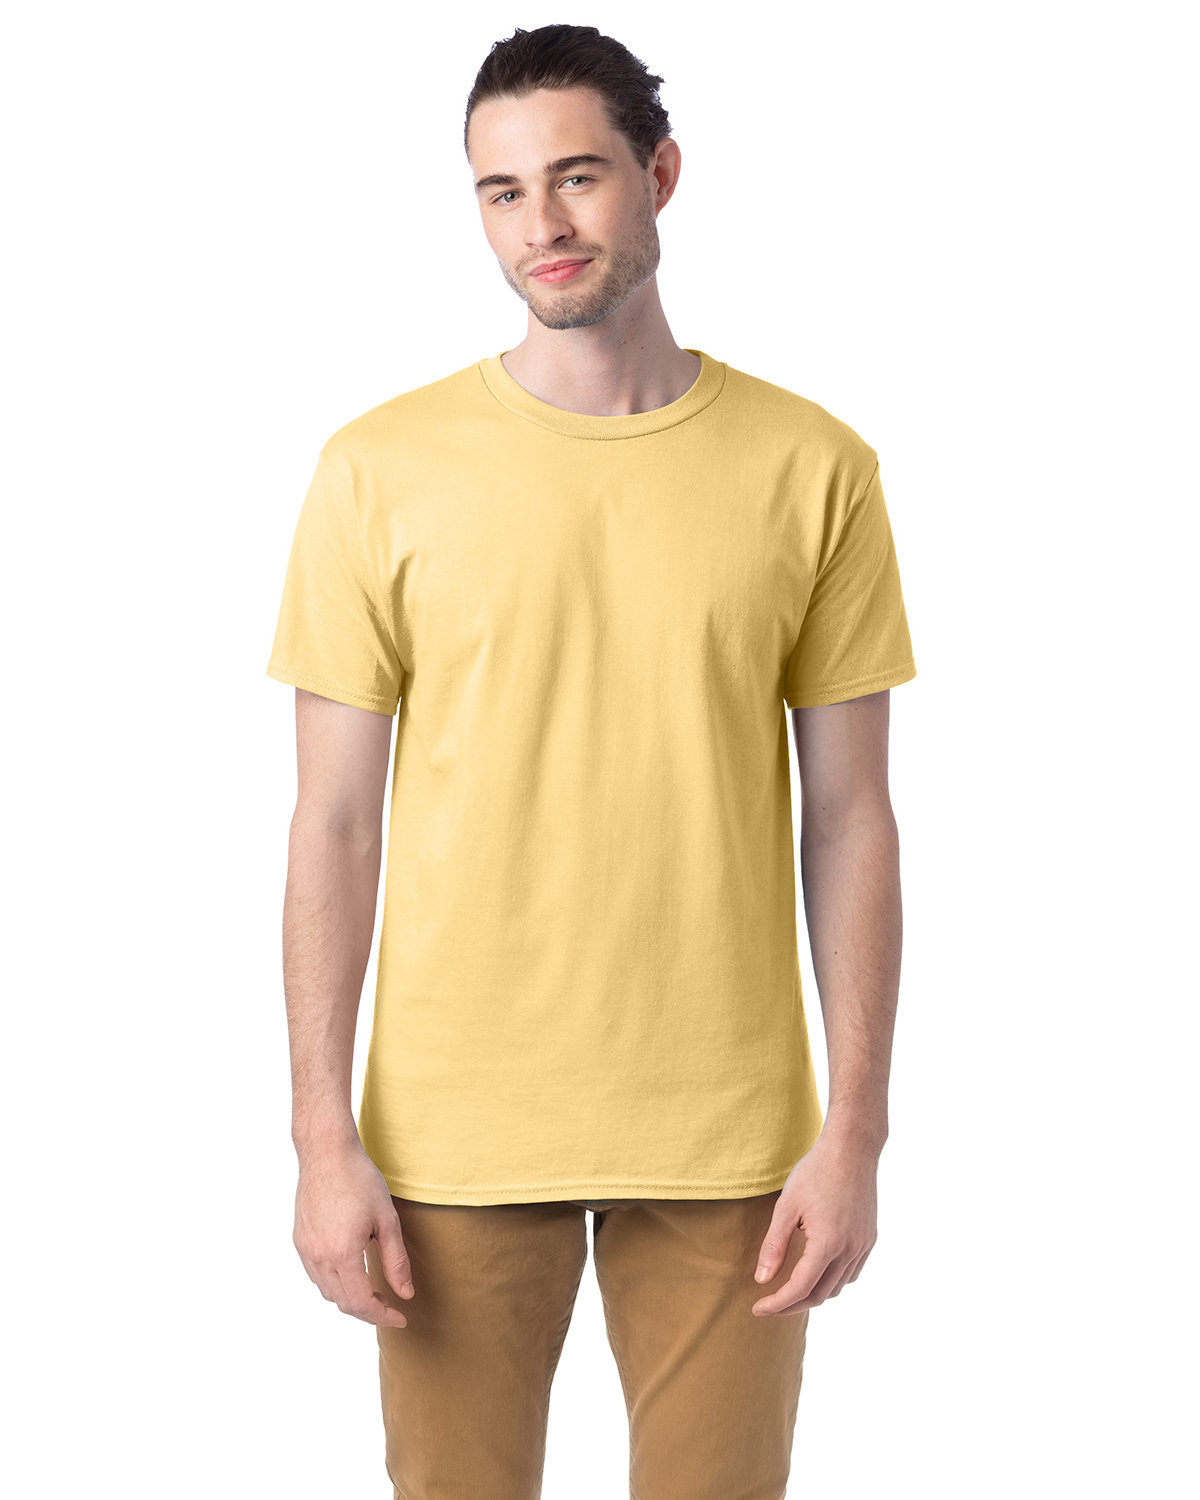 Hanes Unisex 5.2 oz., Comfortsoft® Cotton T-Shirt ATHLETIC GOLD 